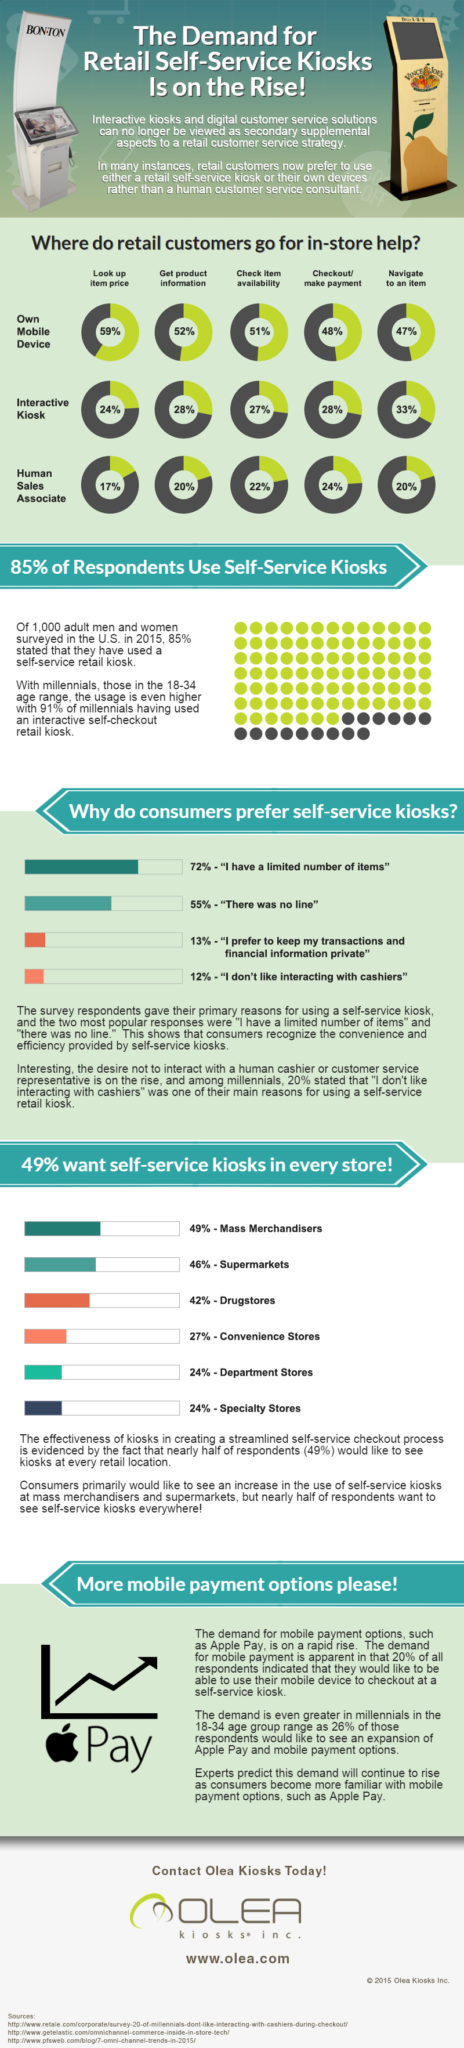 Retail Kiosk Trends 2015 Infographic